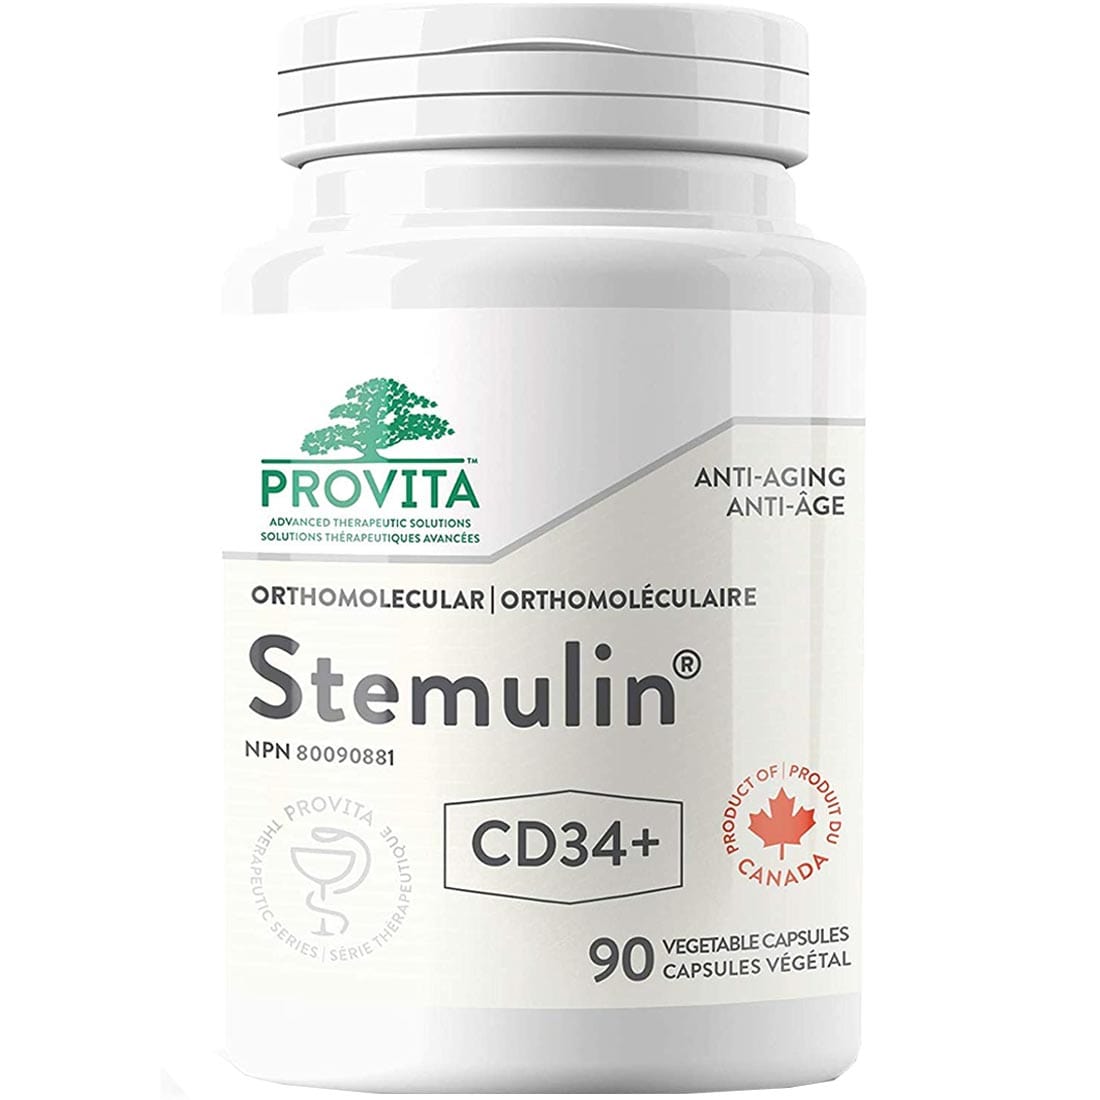 Provita Stemulin CD34+, 90 Caps